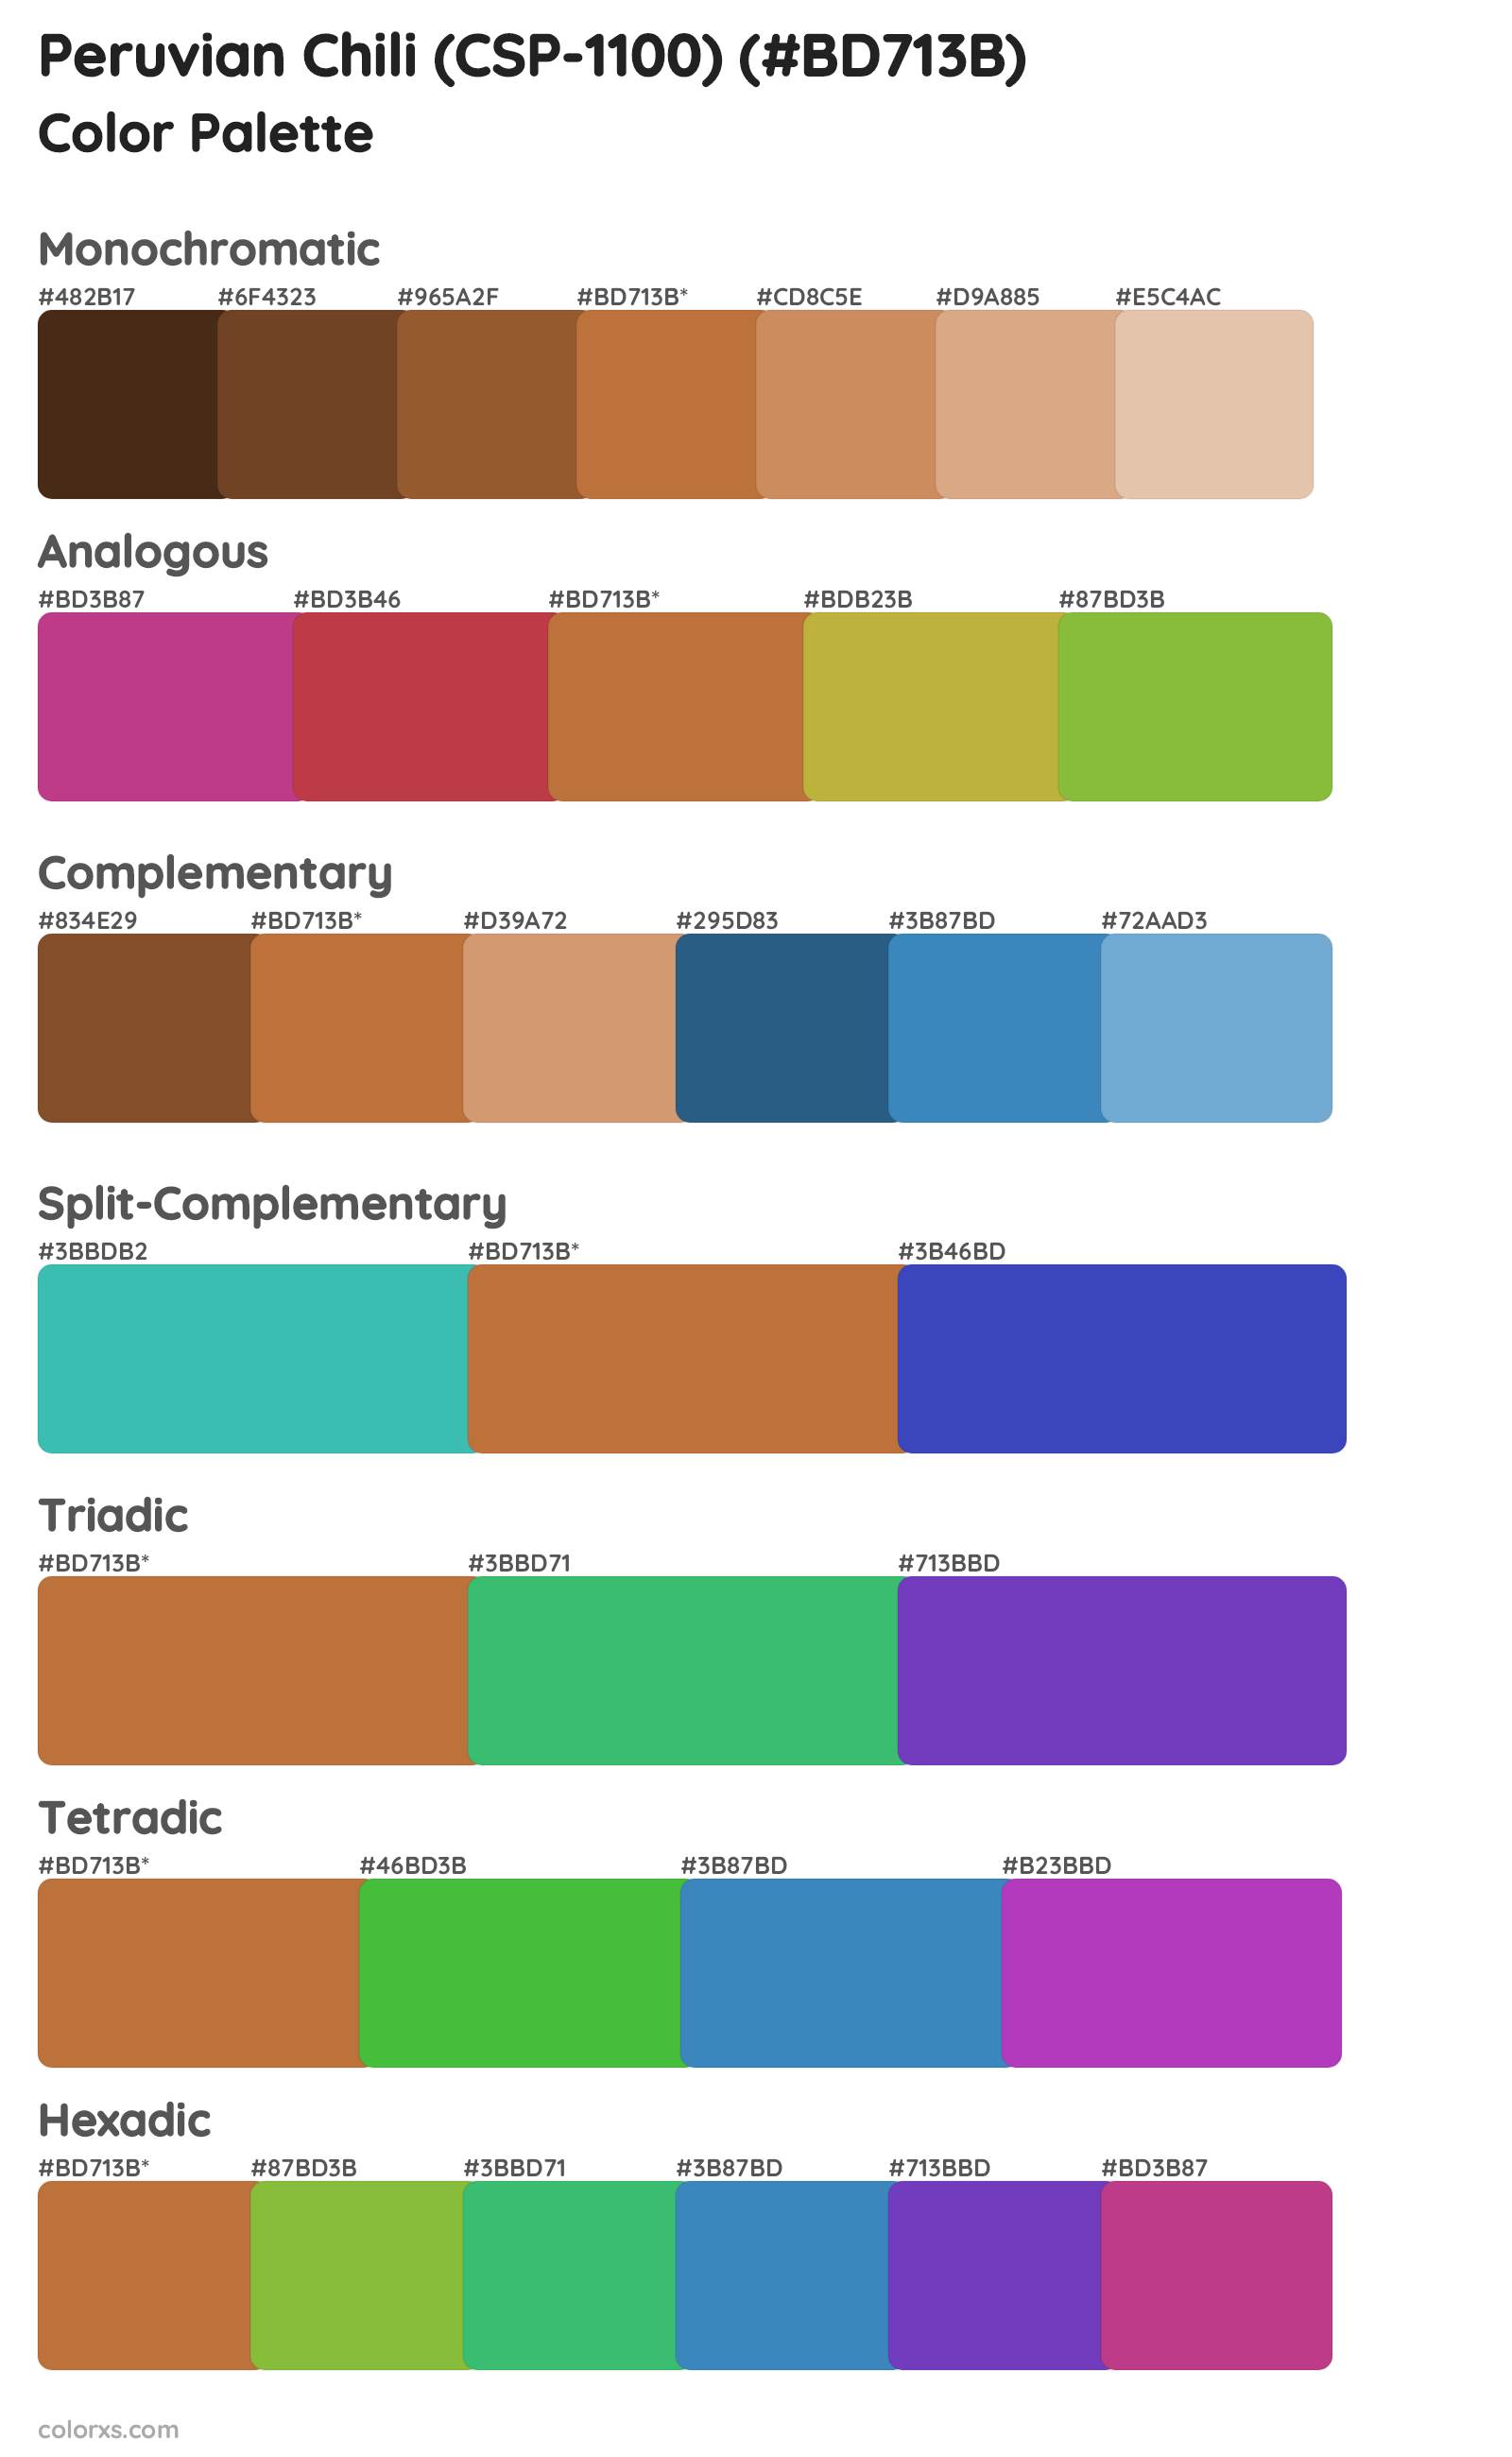 Peruvian Chili (CSP-1100) Color Scheme Palettes